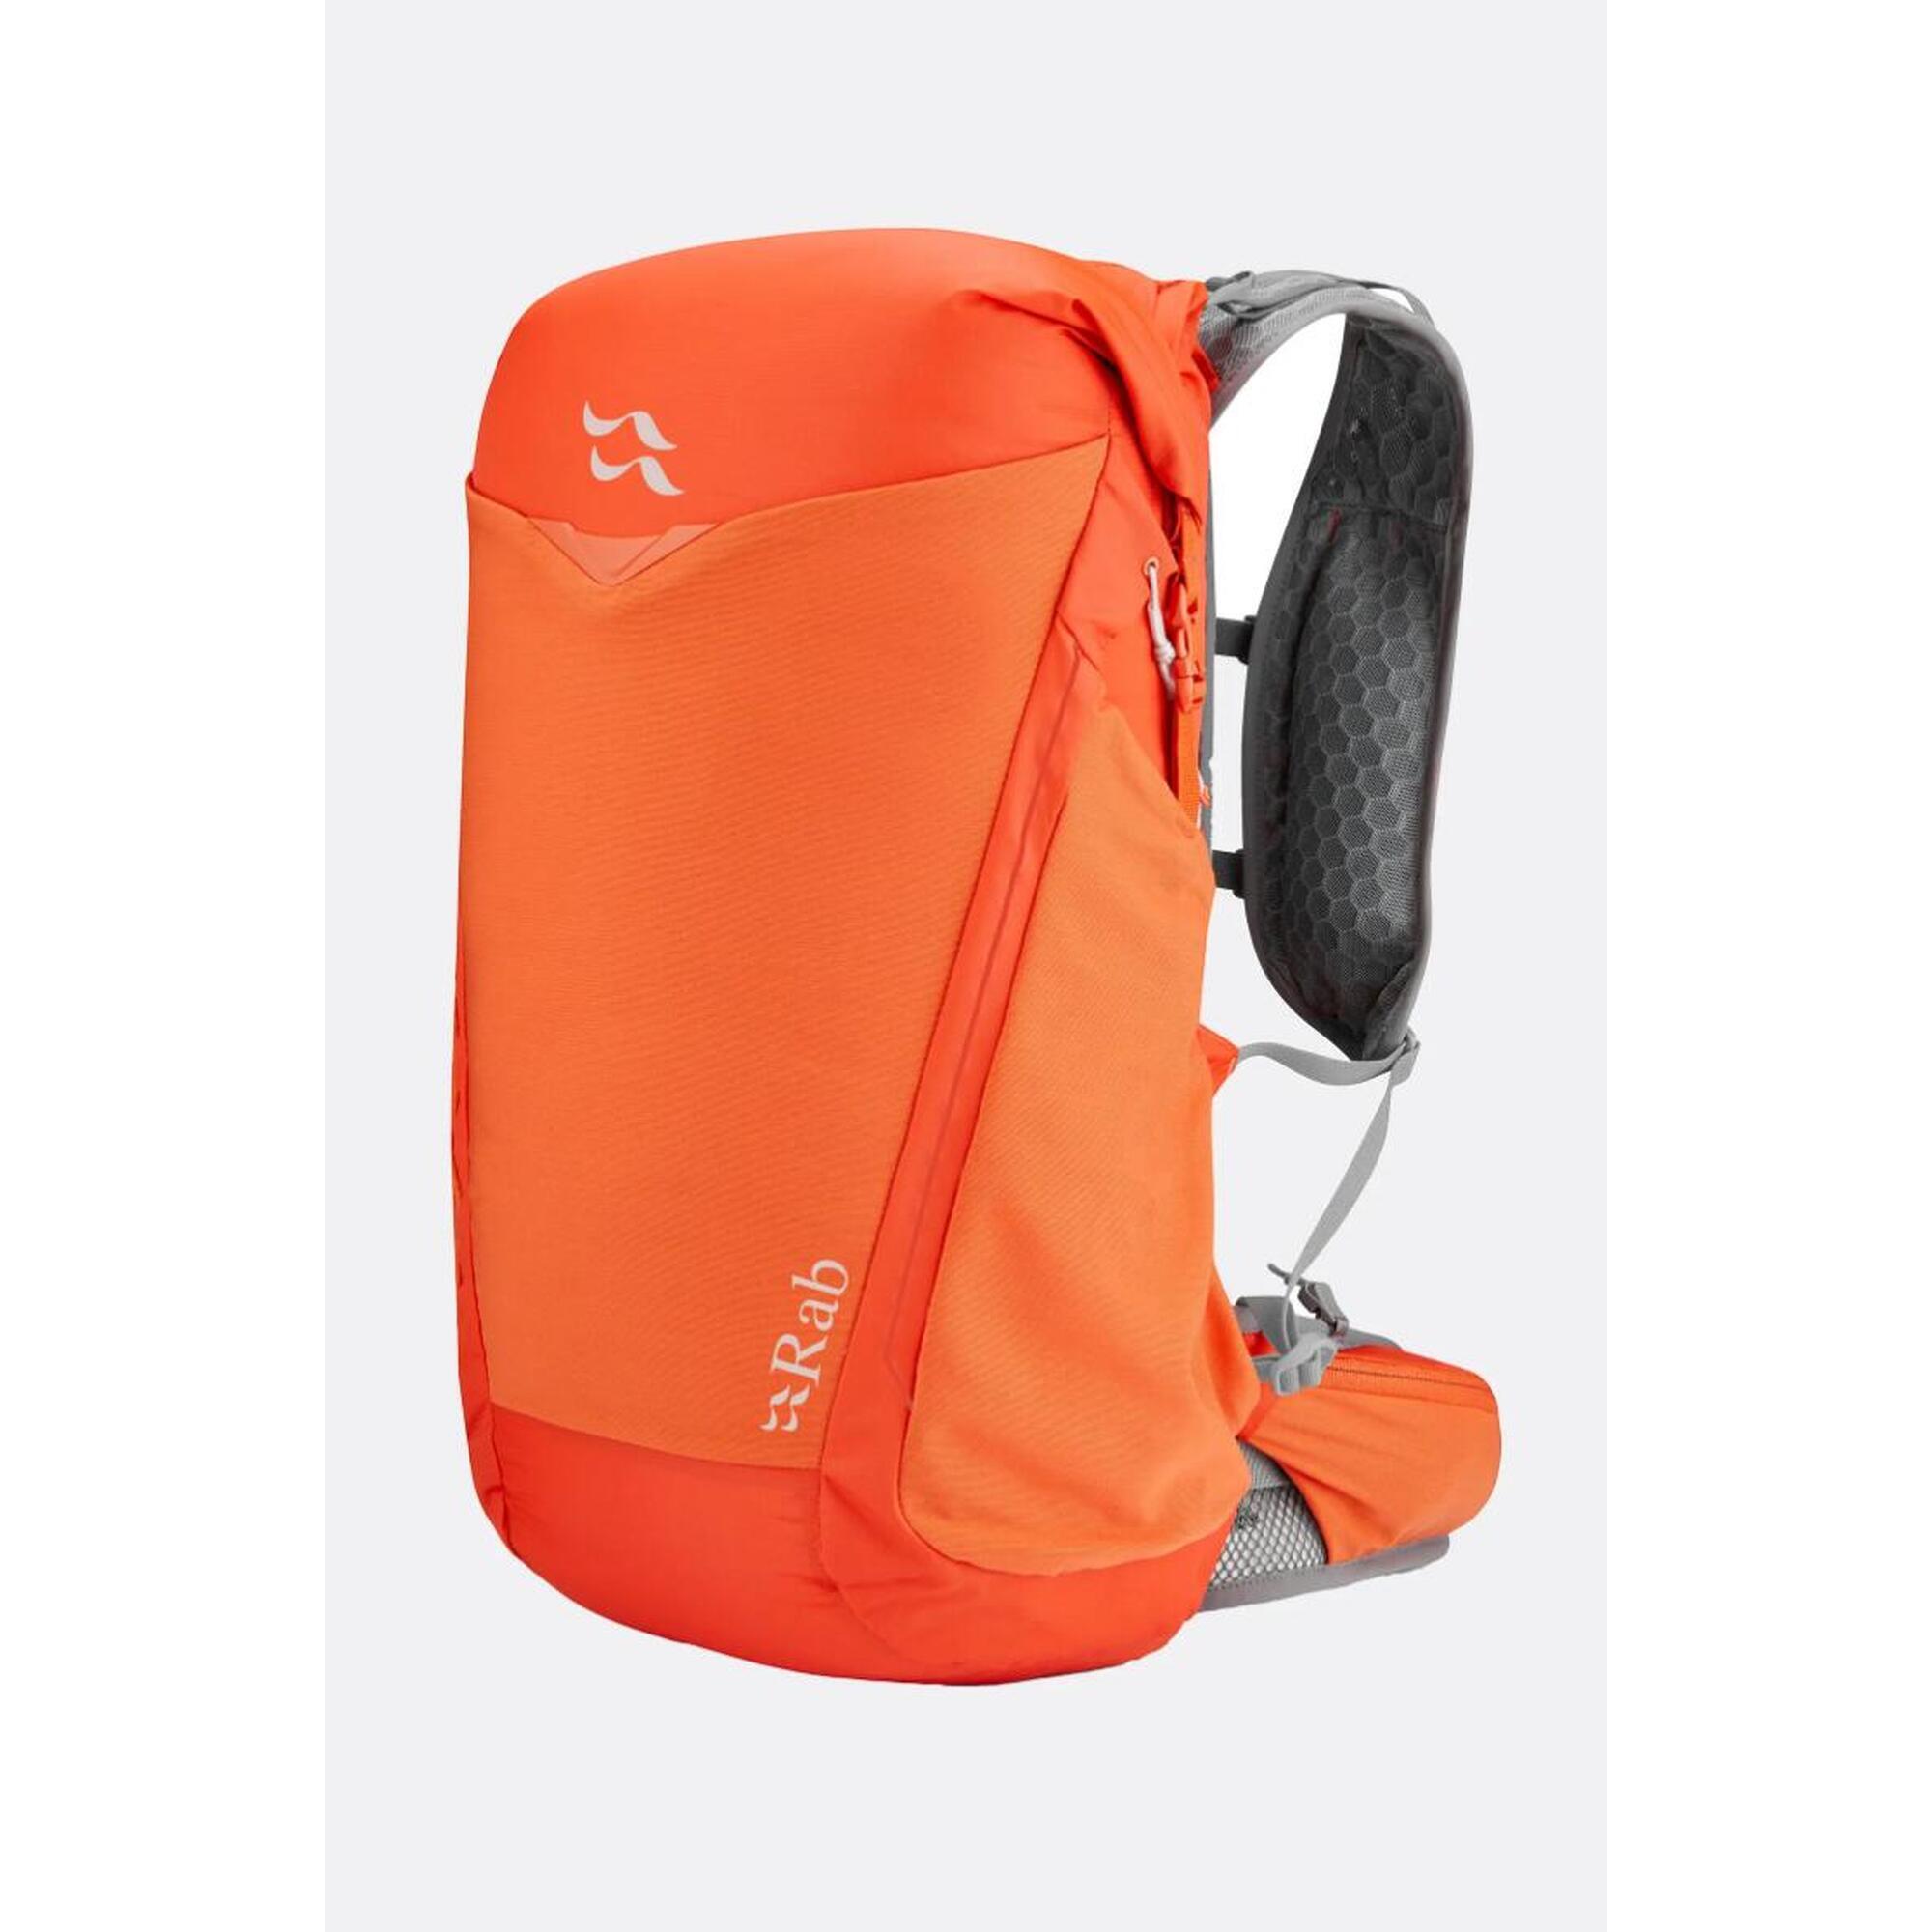 Aeon Ultra Lightweight Hiking Backpack 28L - Orange